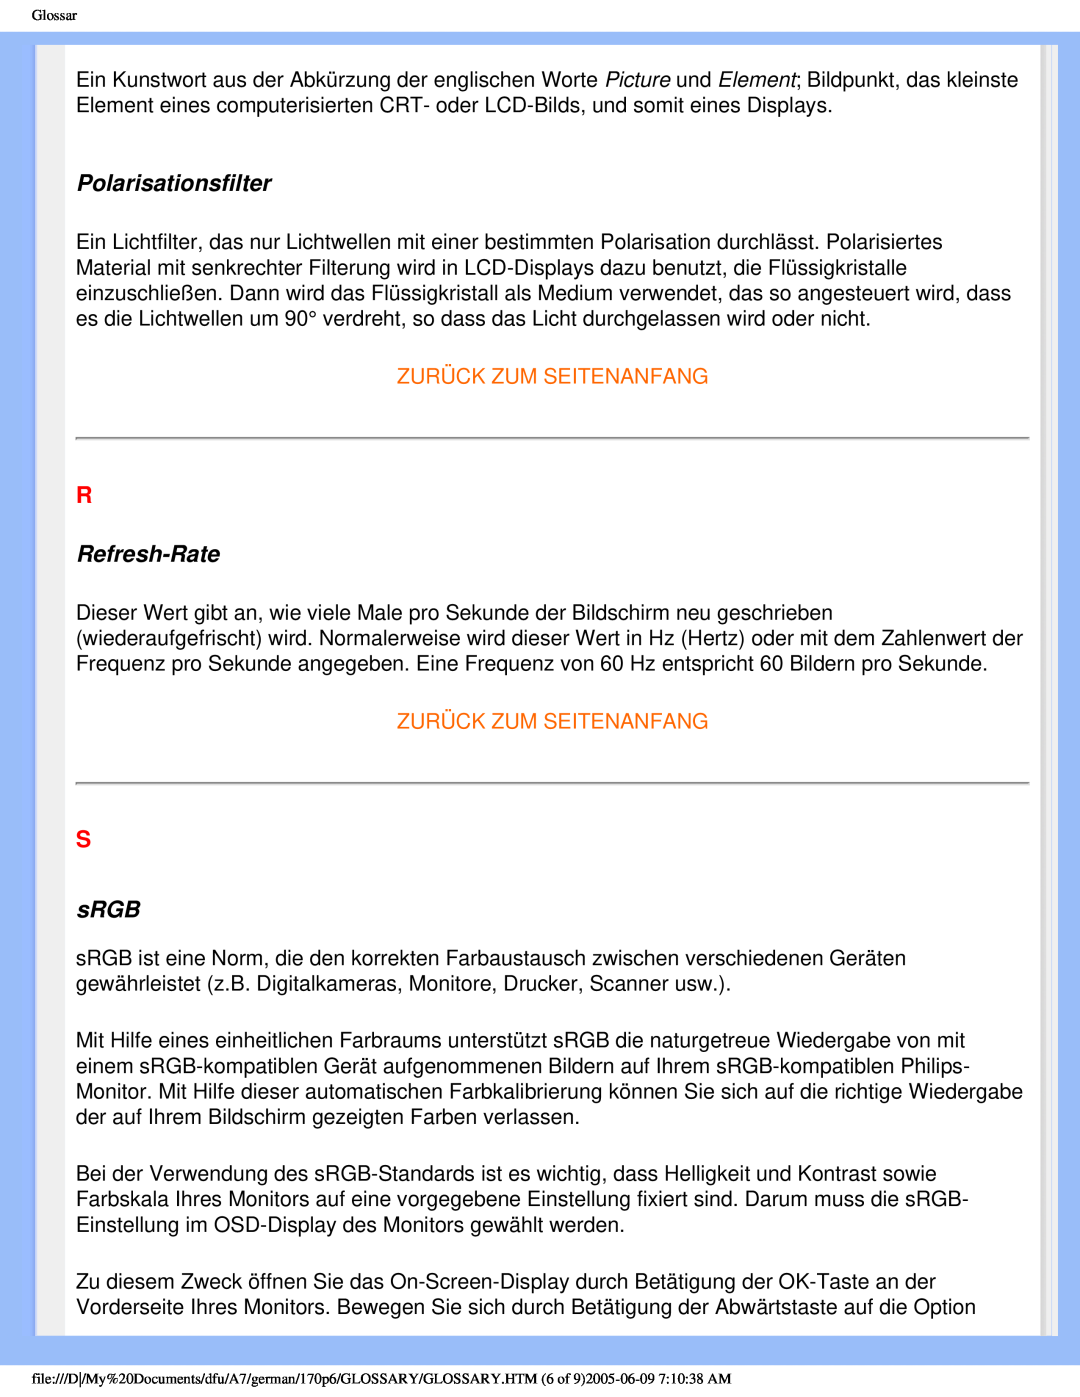 Philips 170p6 user manual Polarisationsfilter, Refresh-Rate, sRGB, Zurück Zum Seitenanfang 